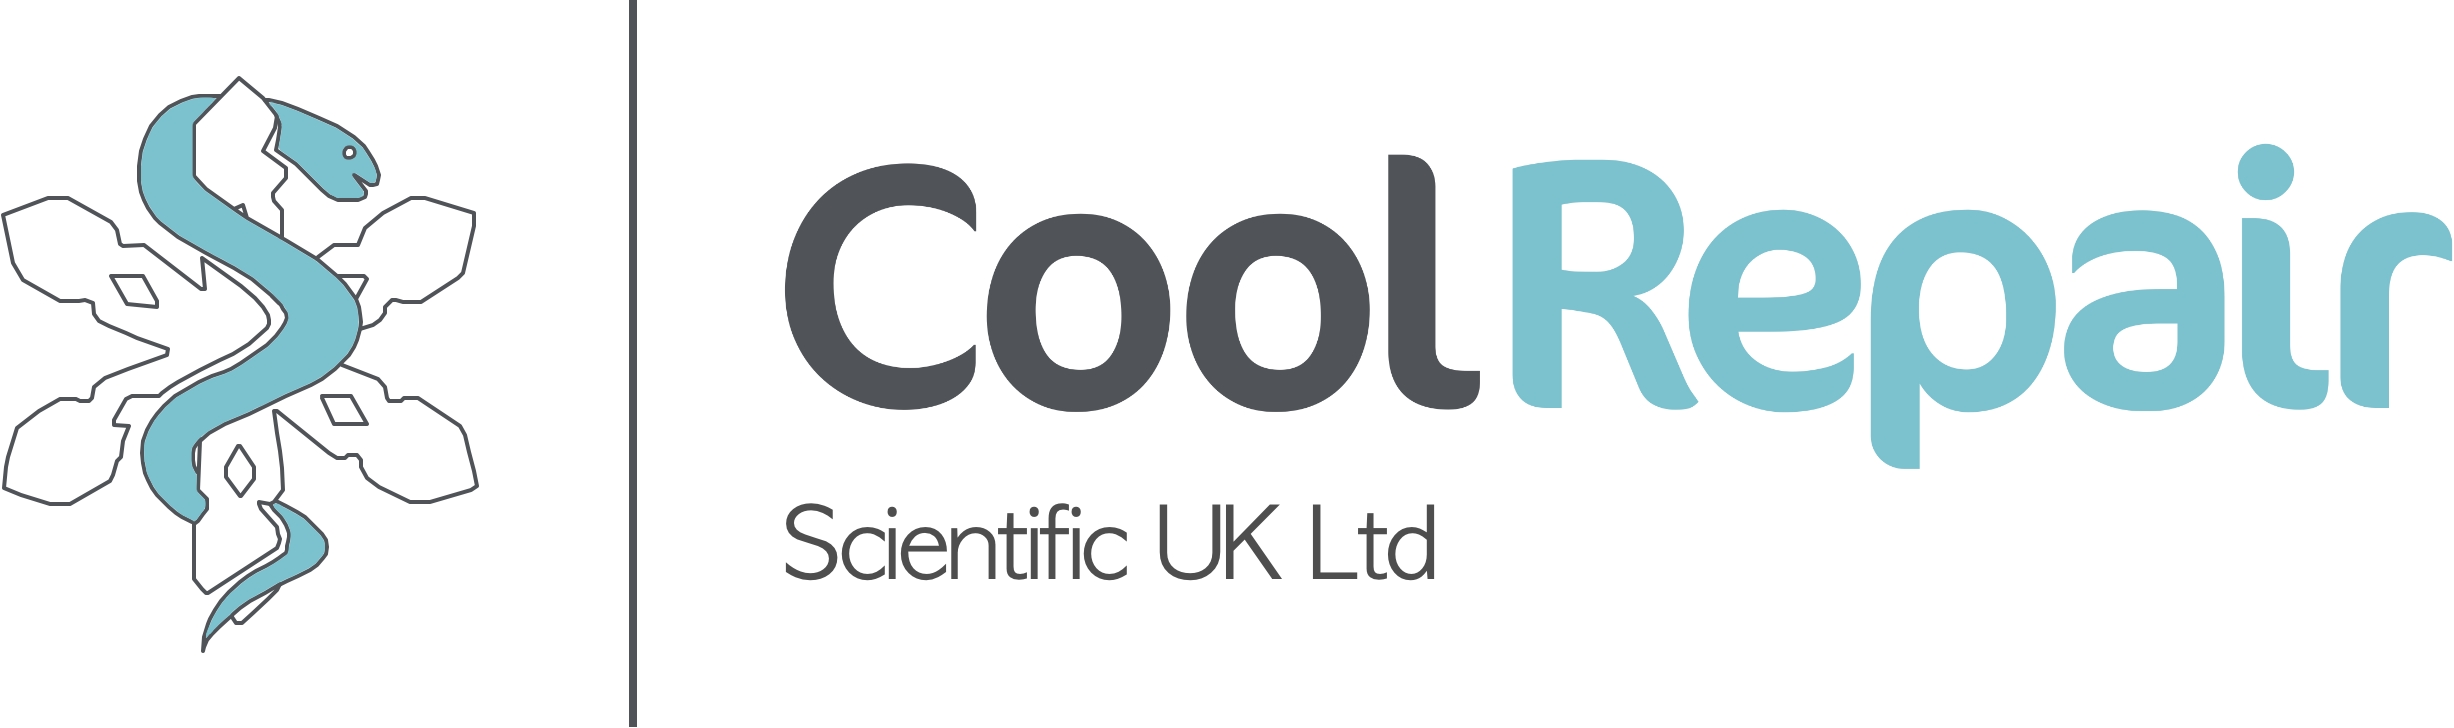 Cool Repair Scientific UK - Leading cryogenic freezer specialists